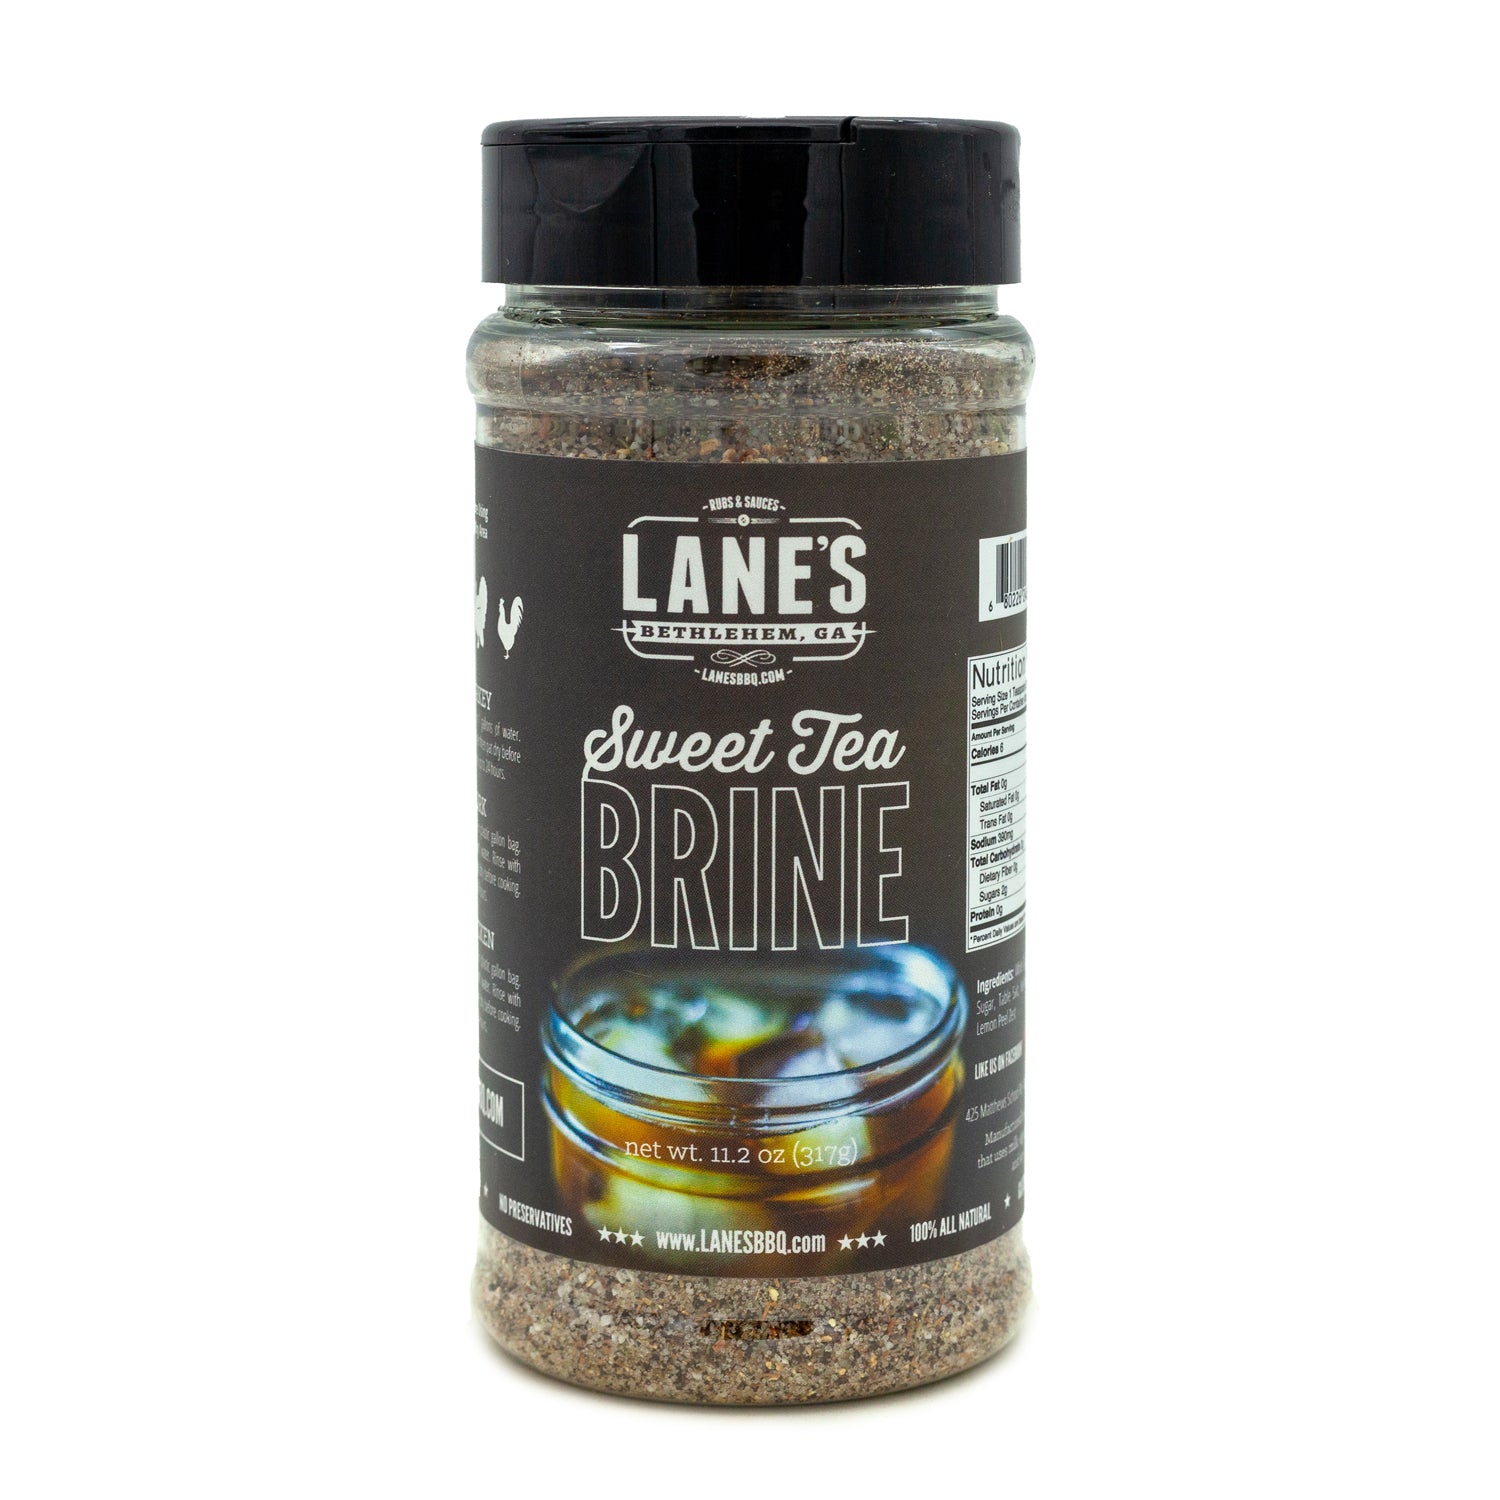 Lane's BBQ Brine Bundle - 3 Pack